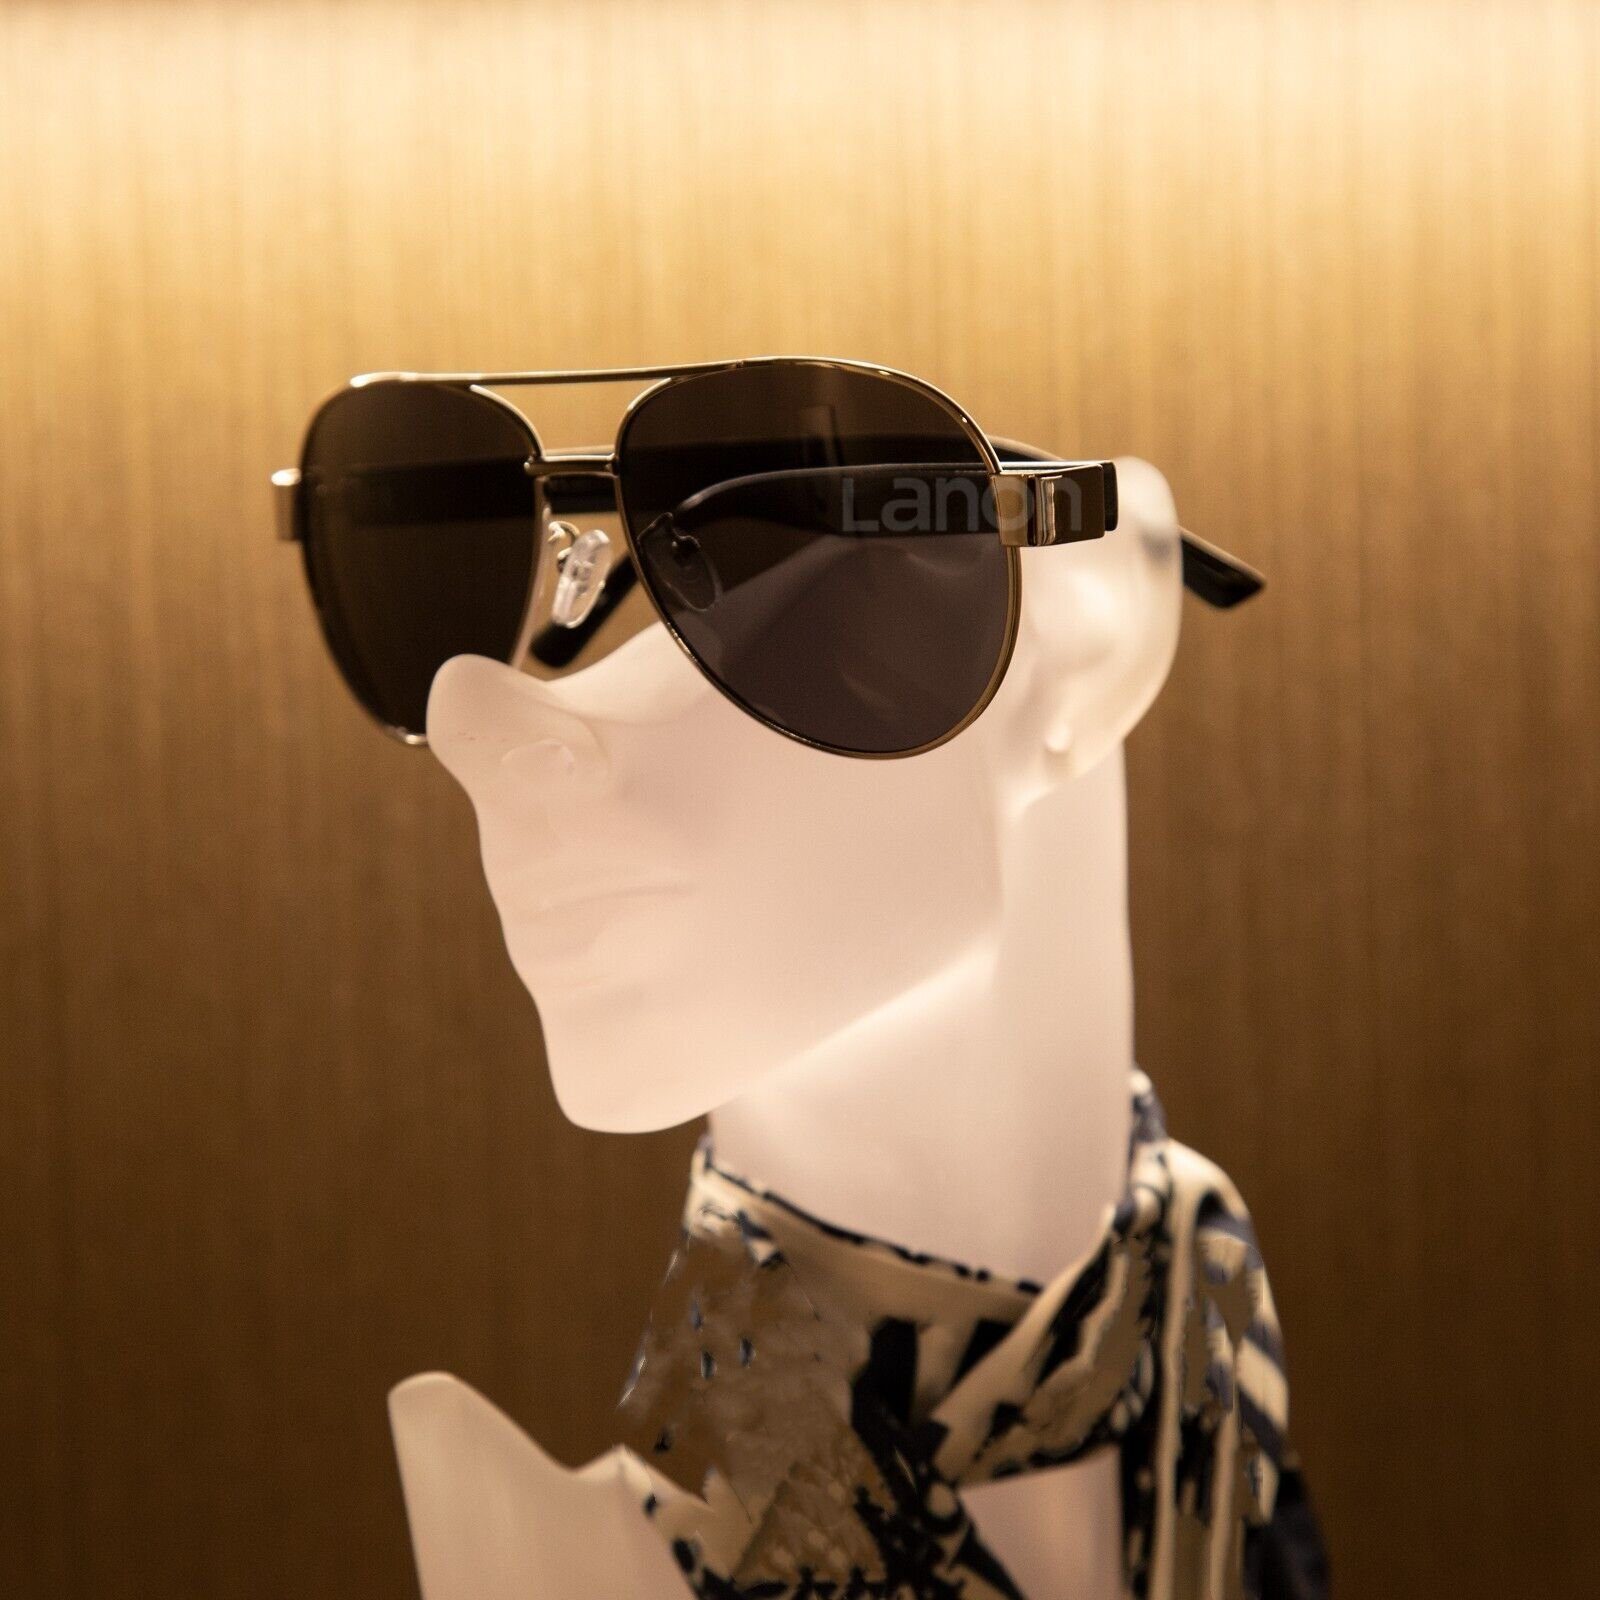 Lamon Sonnenbrille Herren graue Magnesium schwarzer UV400 Polarisiert Aluminium Rahmen, Sportarten Linse Sonnenbrille